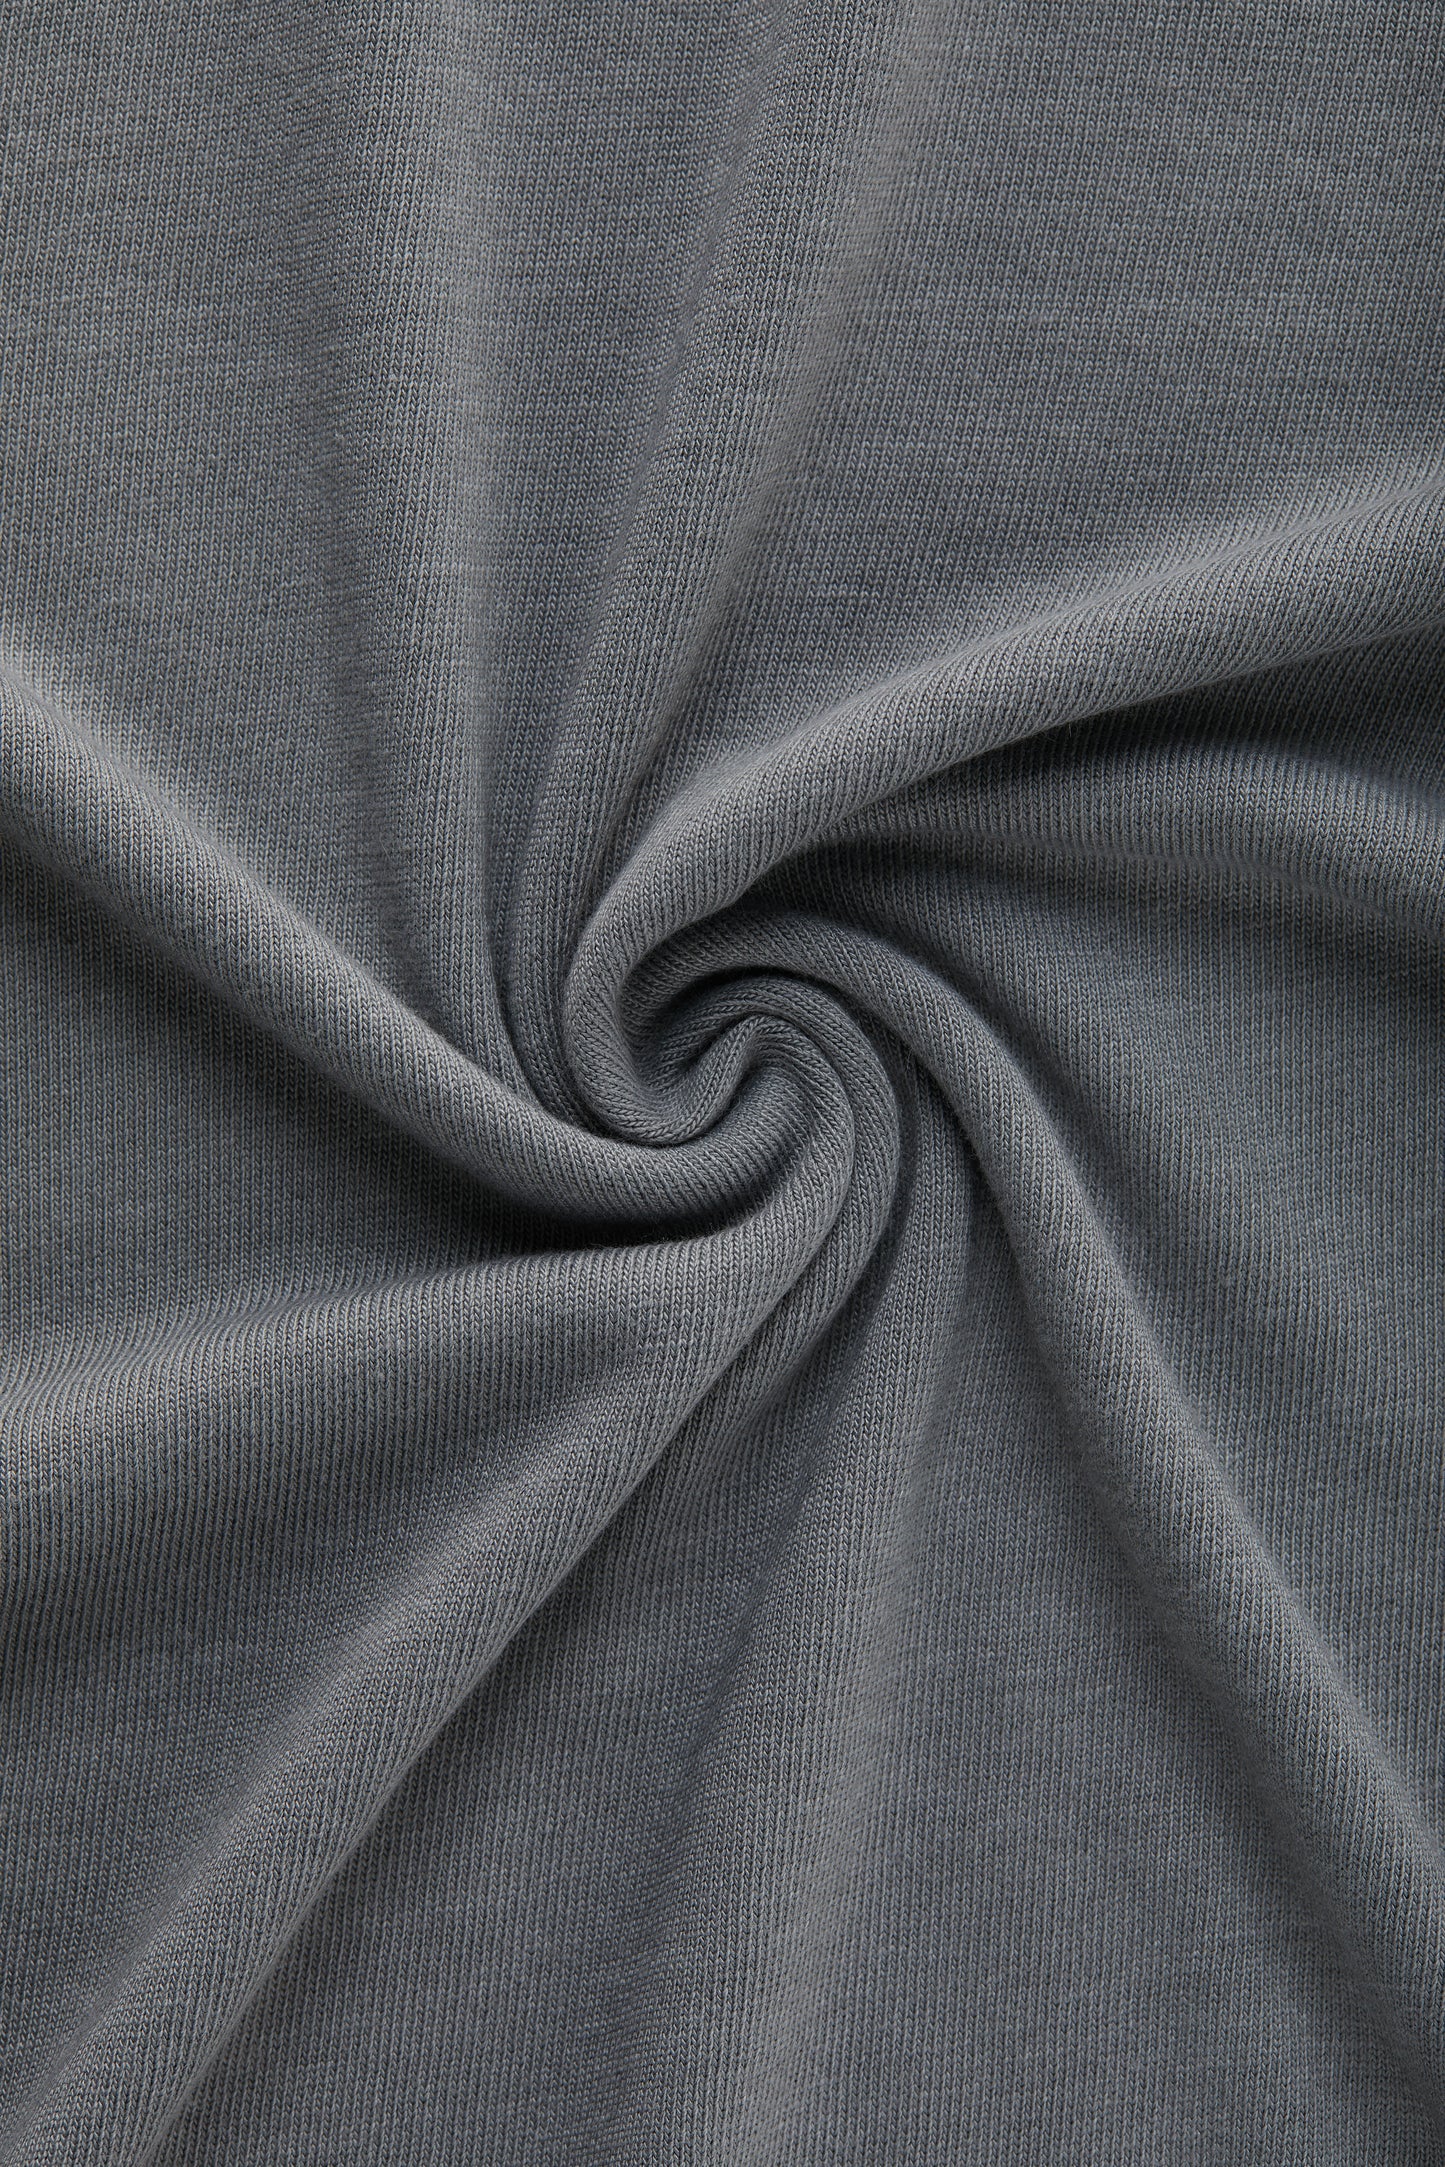 Galba Long Sleeve Hooded Tee Shirt Charcoal Gray